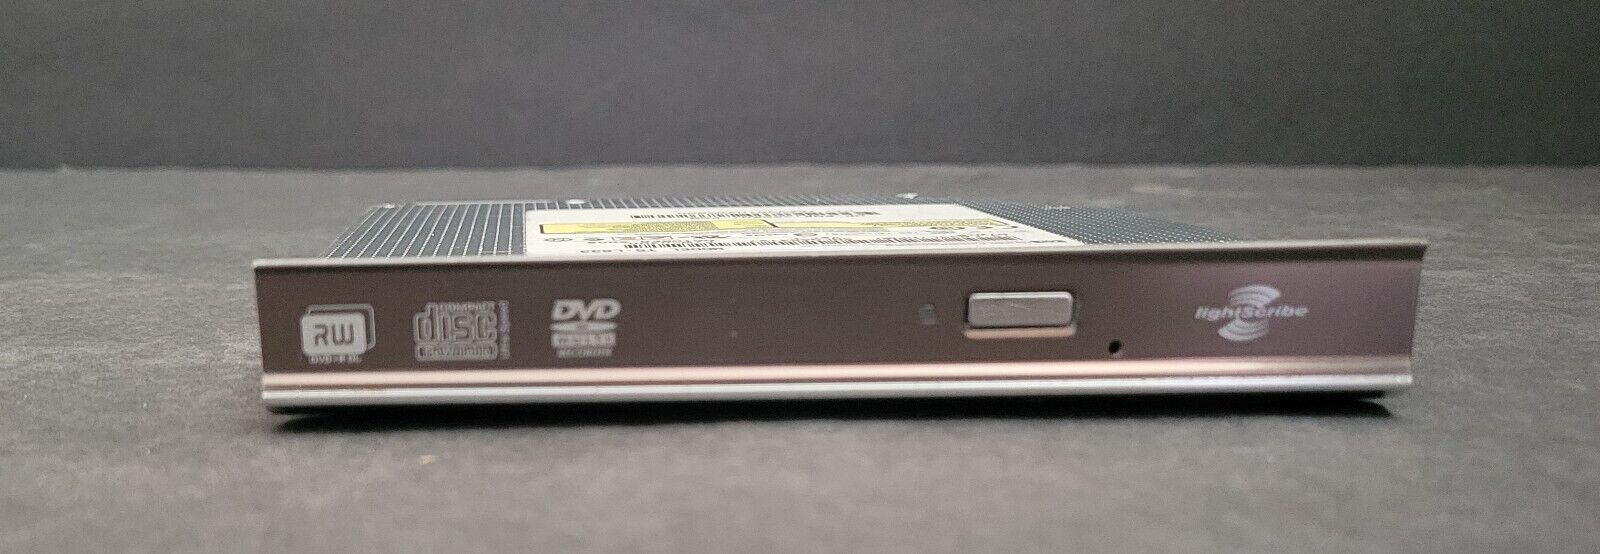 HP TS-L633 Lightscribe SATA DL 12.7 MM DVD±RW Drive. NICE